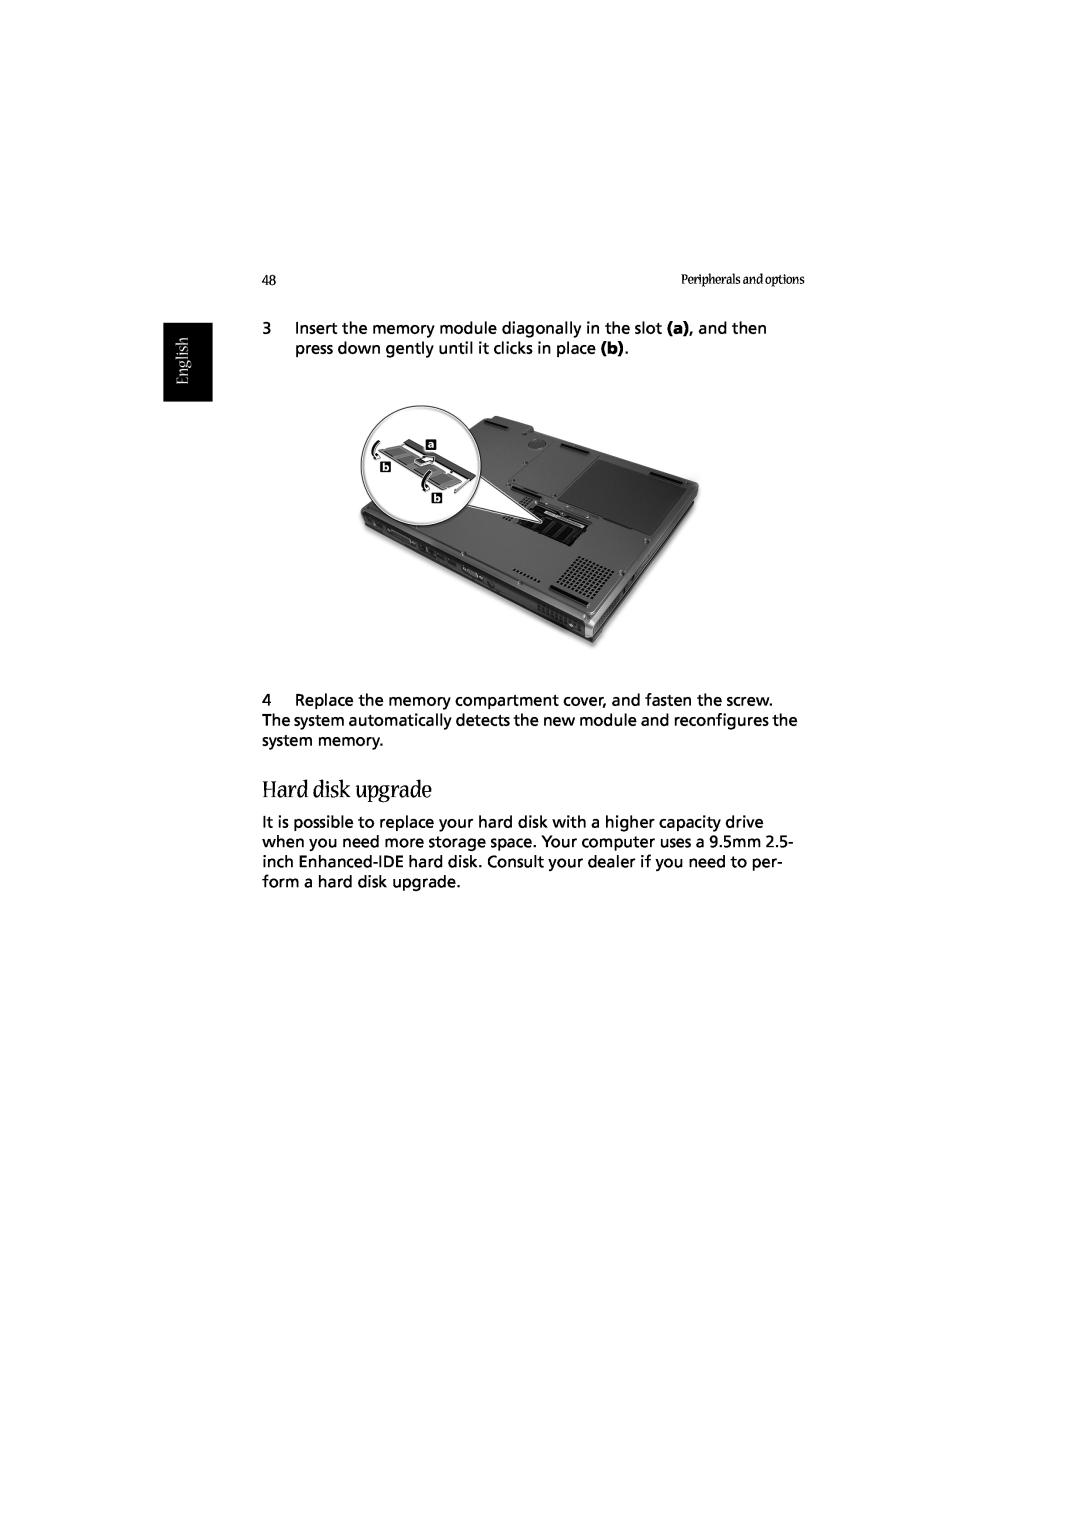 Acer 2010 manual Hard disk upgrade, English 